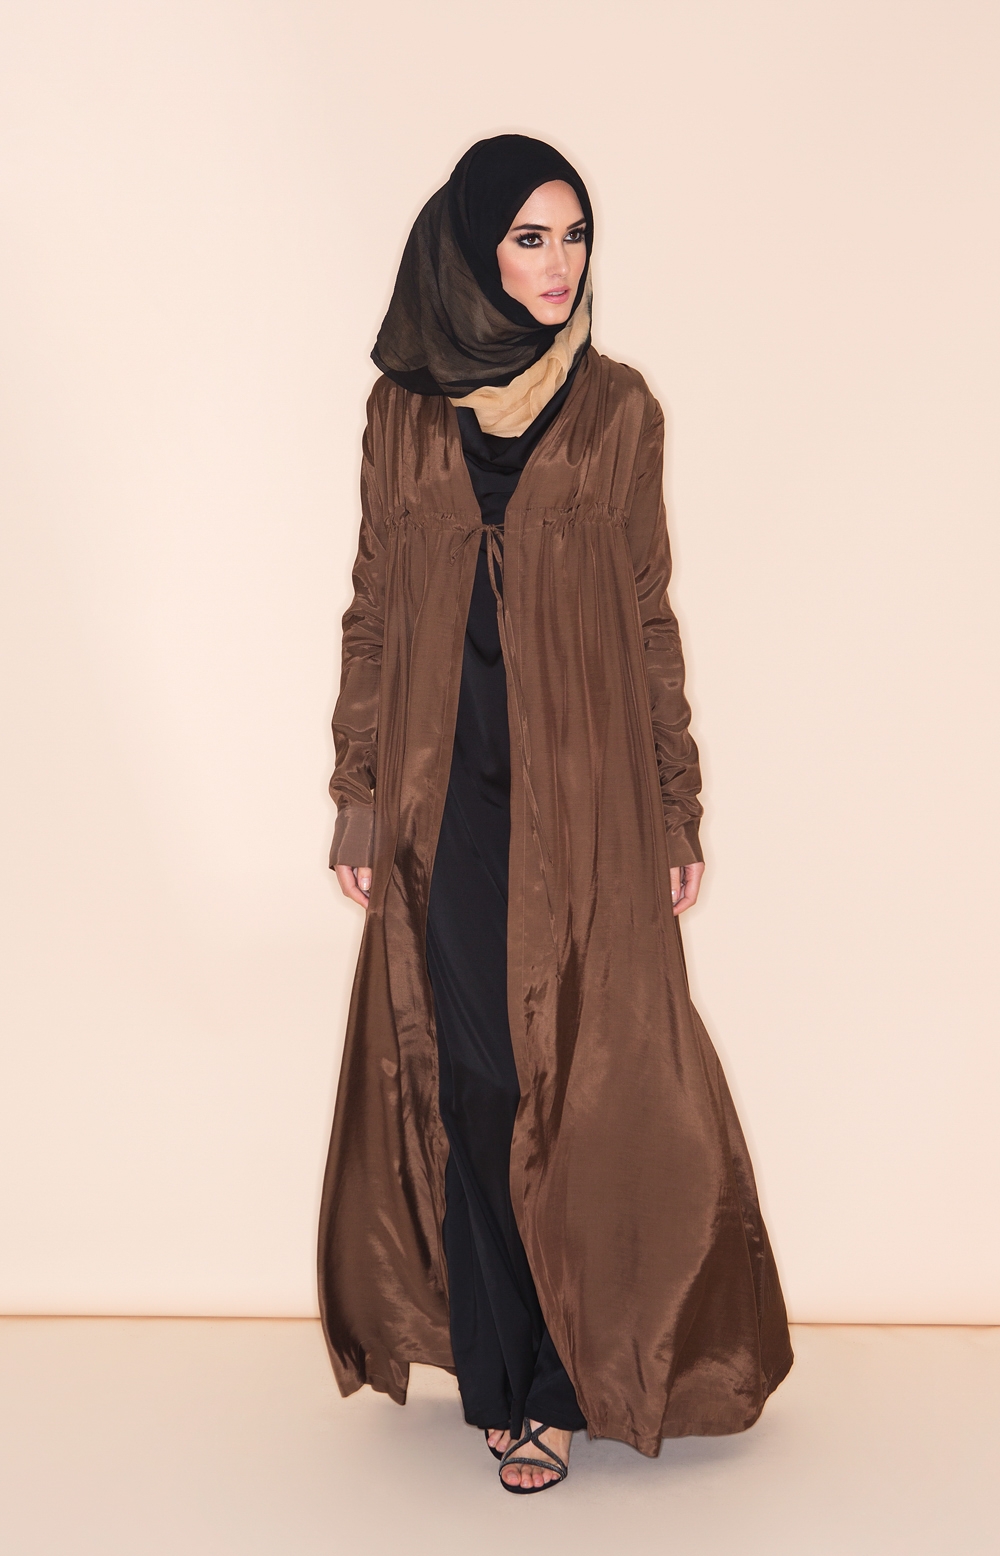 10+ Contoh Model Baju Muslim Terbaru 2017 - Model HIjab